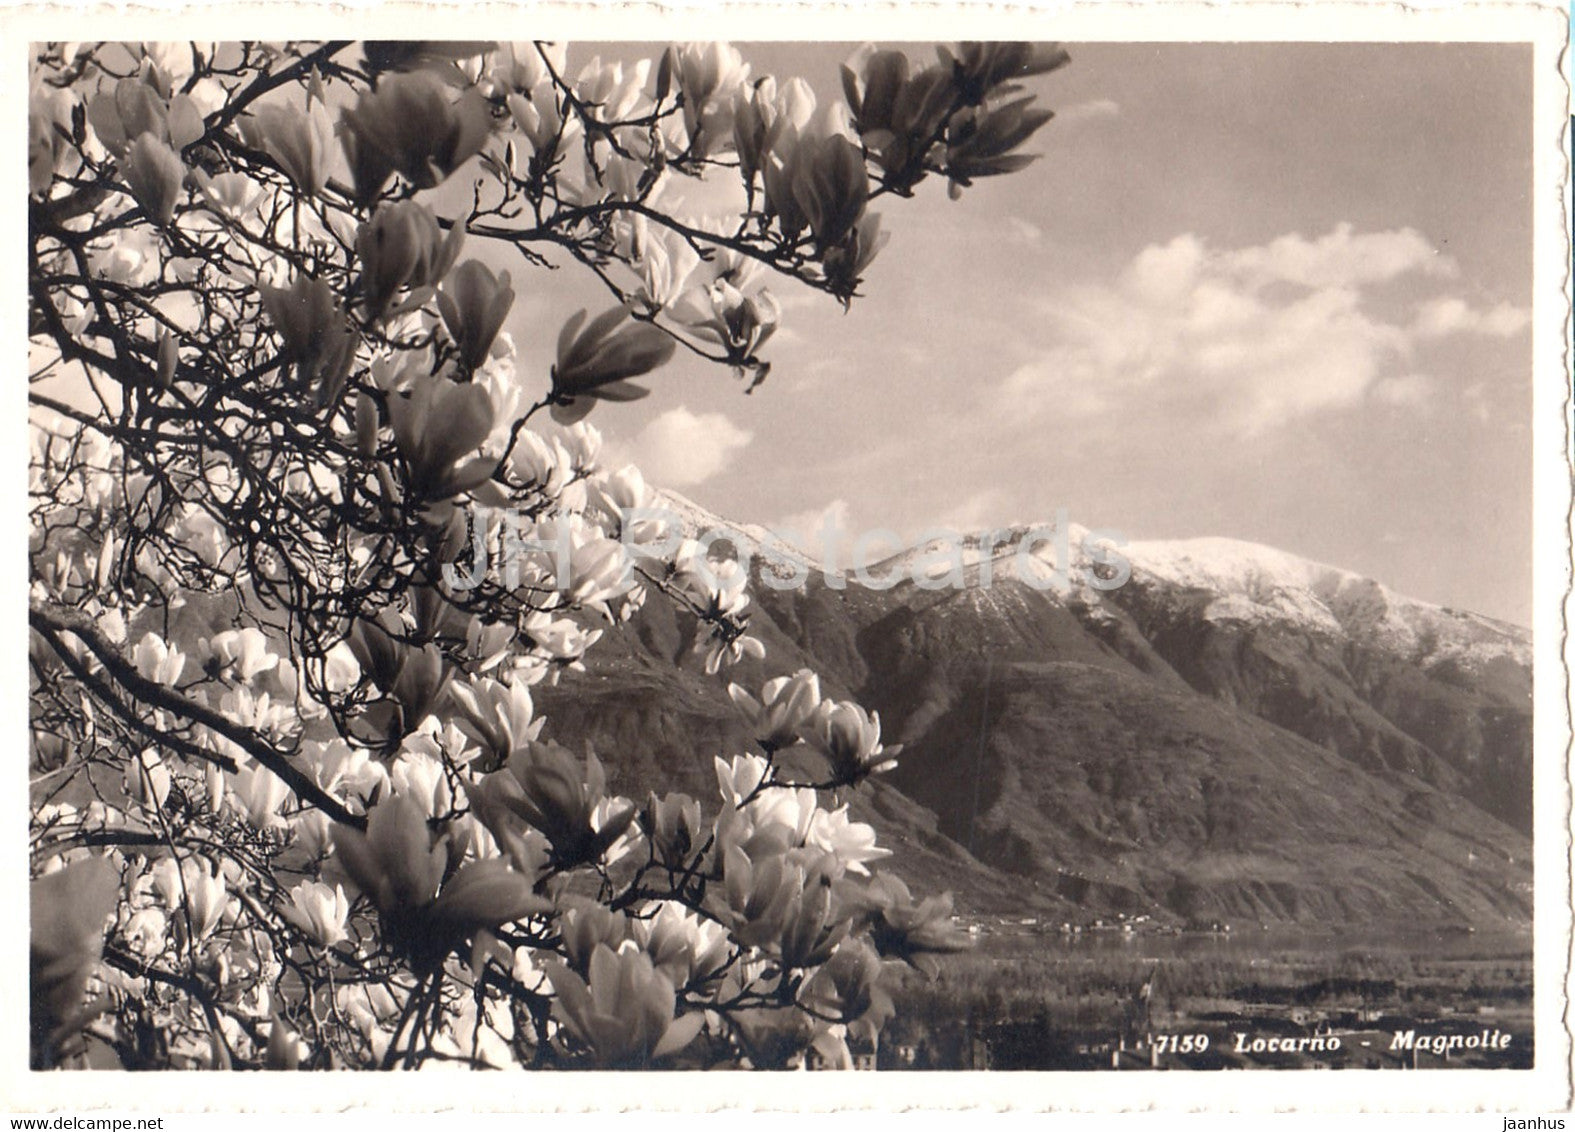 Locarno - Magnolie - 7159 - old postcard - 1933 - Switzerland - unused - JH Postcards